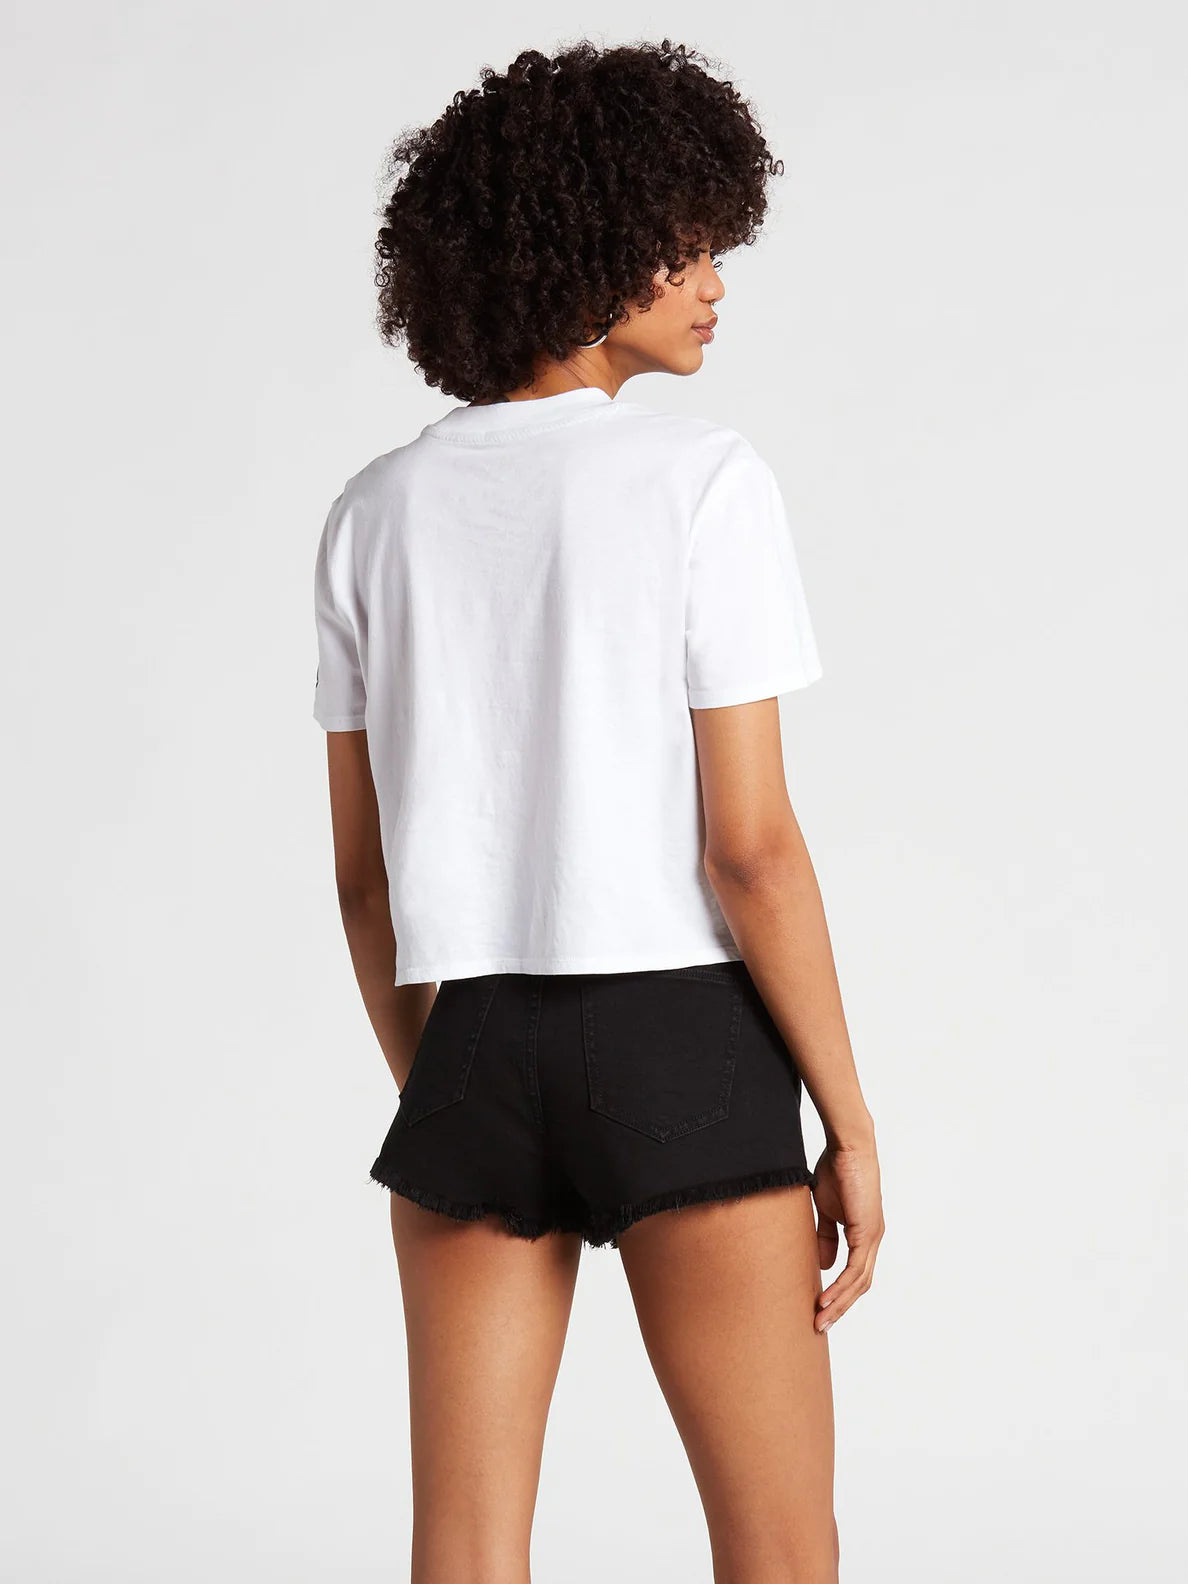 Volcom Stoney Stretch Short Premium Wash Black | Mujer Pantalones | Shorts de mujer | Volcom Shop | surfdevils.com